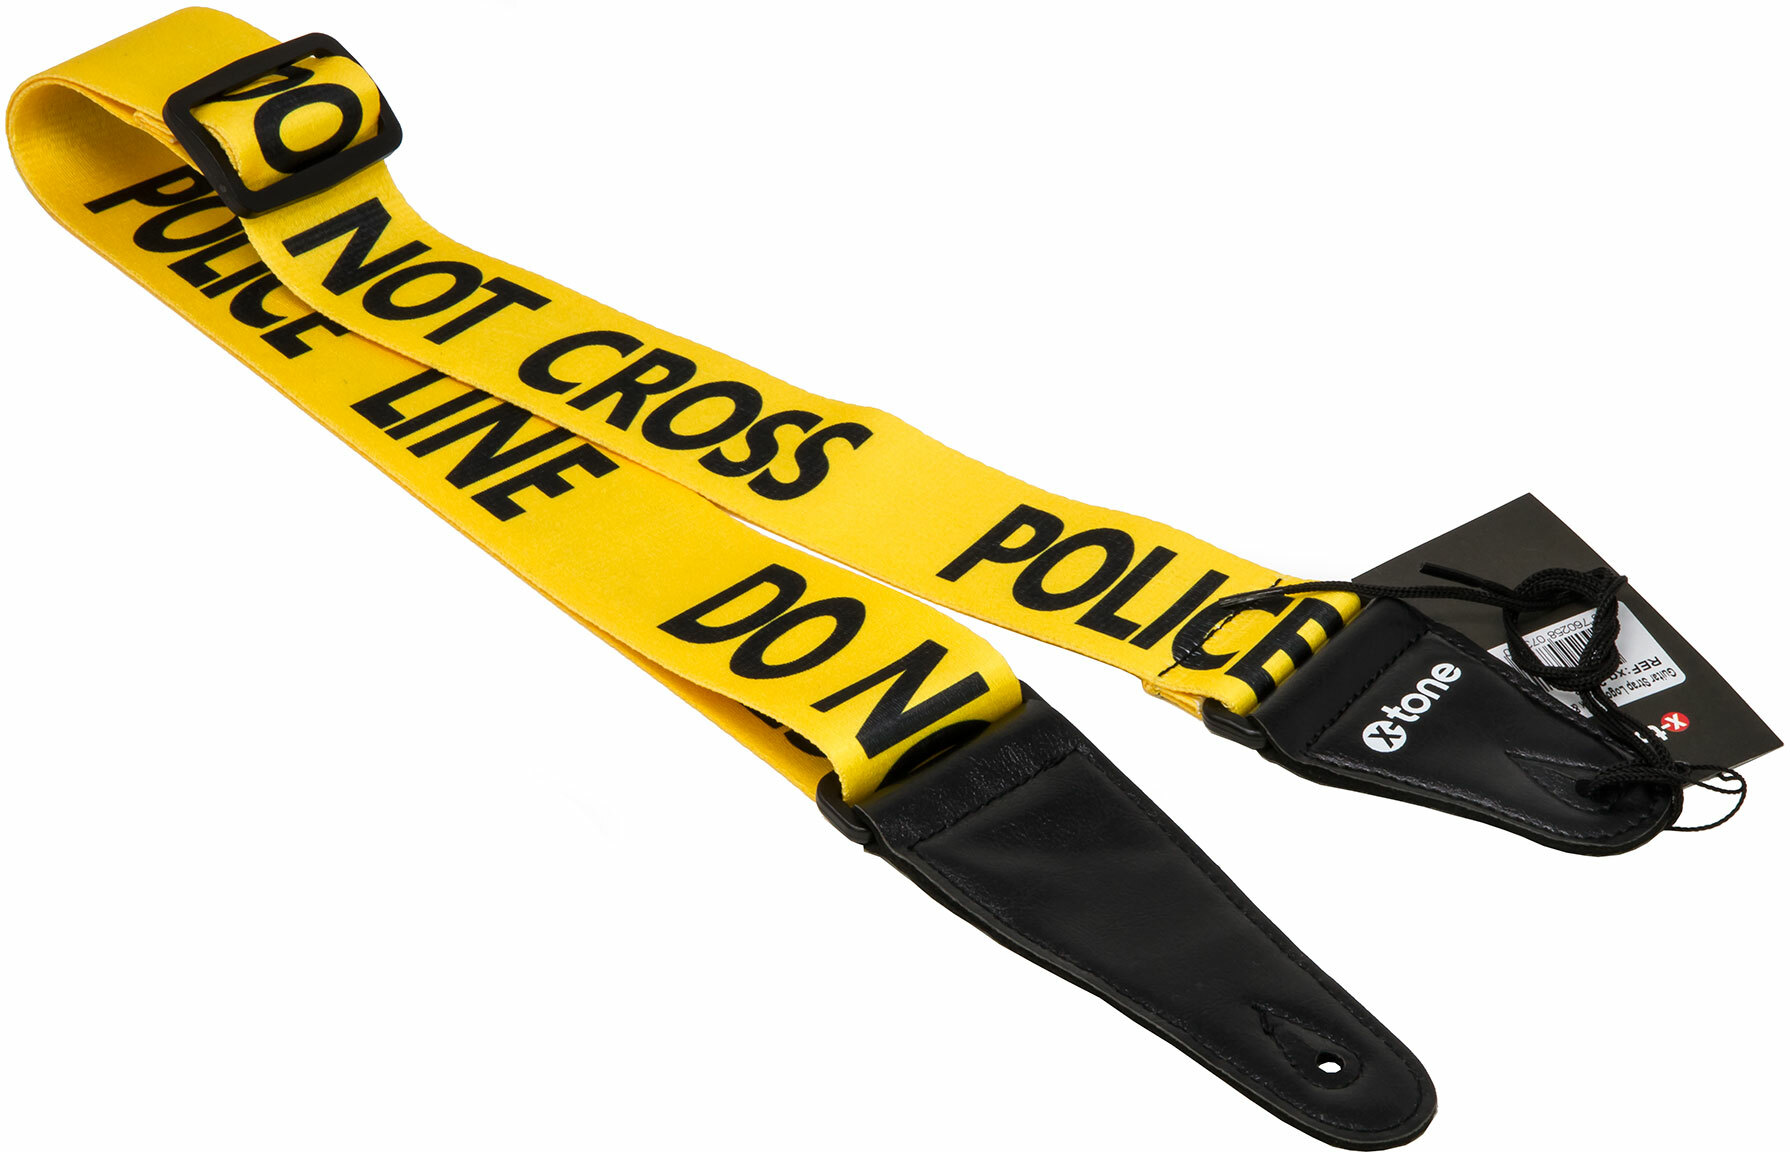 X-tone Xg 3103 Nylon Guitar Strap Police Line Black & Yellow - Sangle Courroie - Main picture